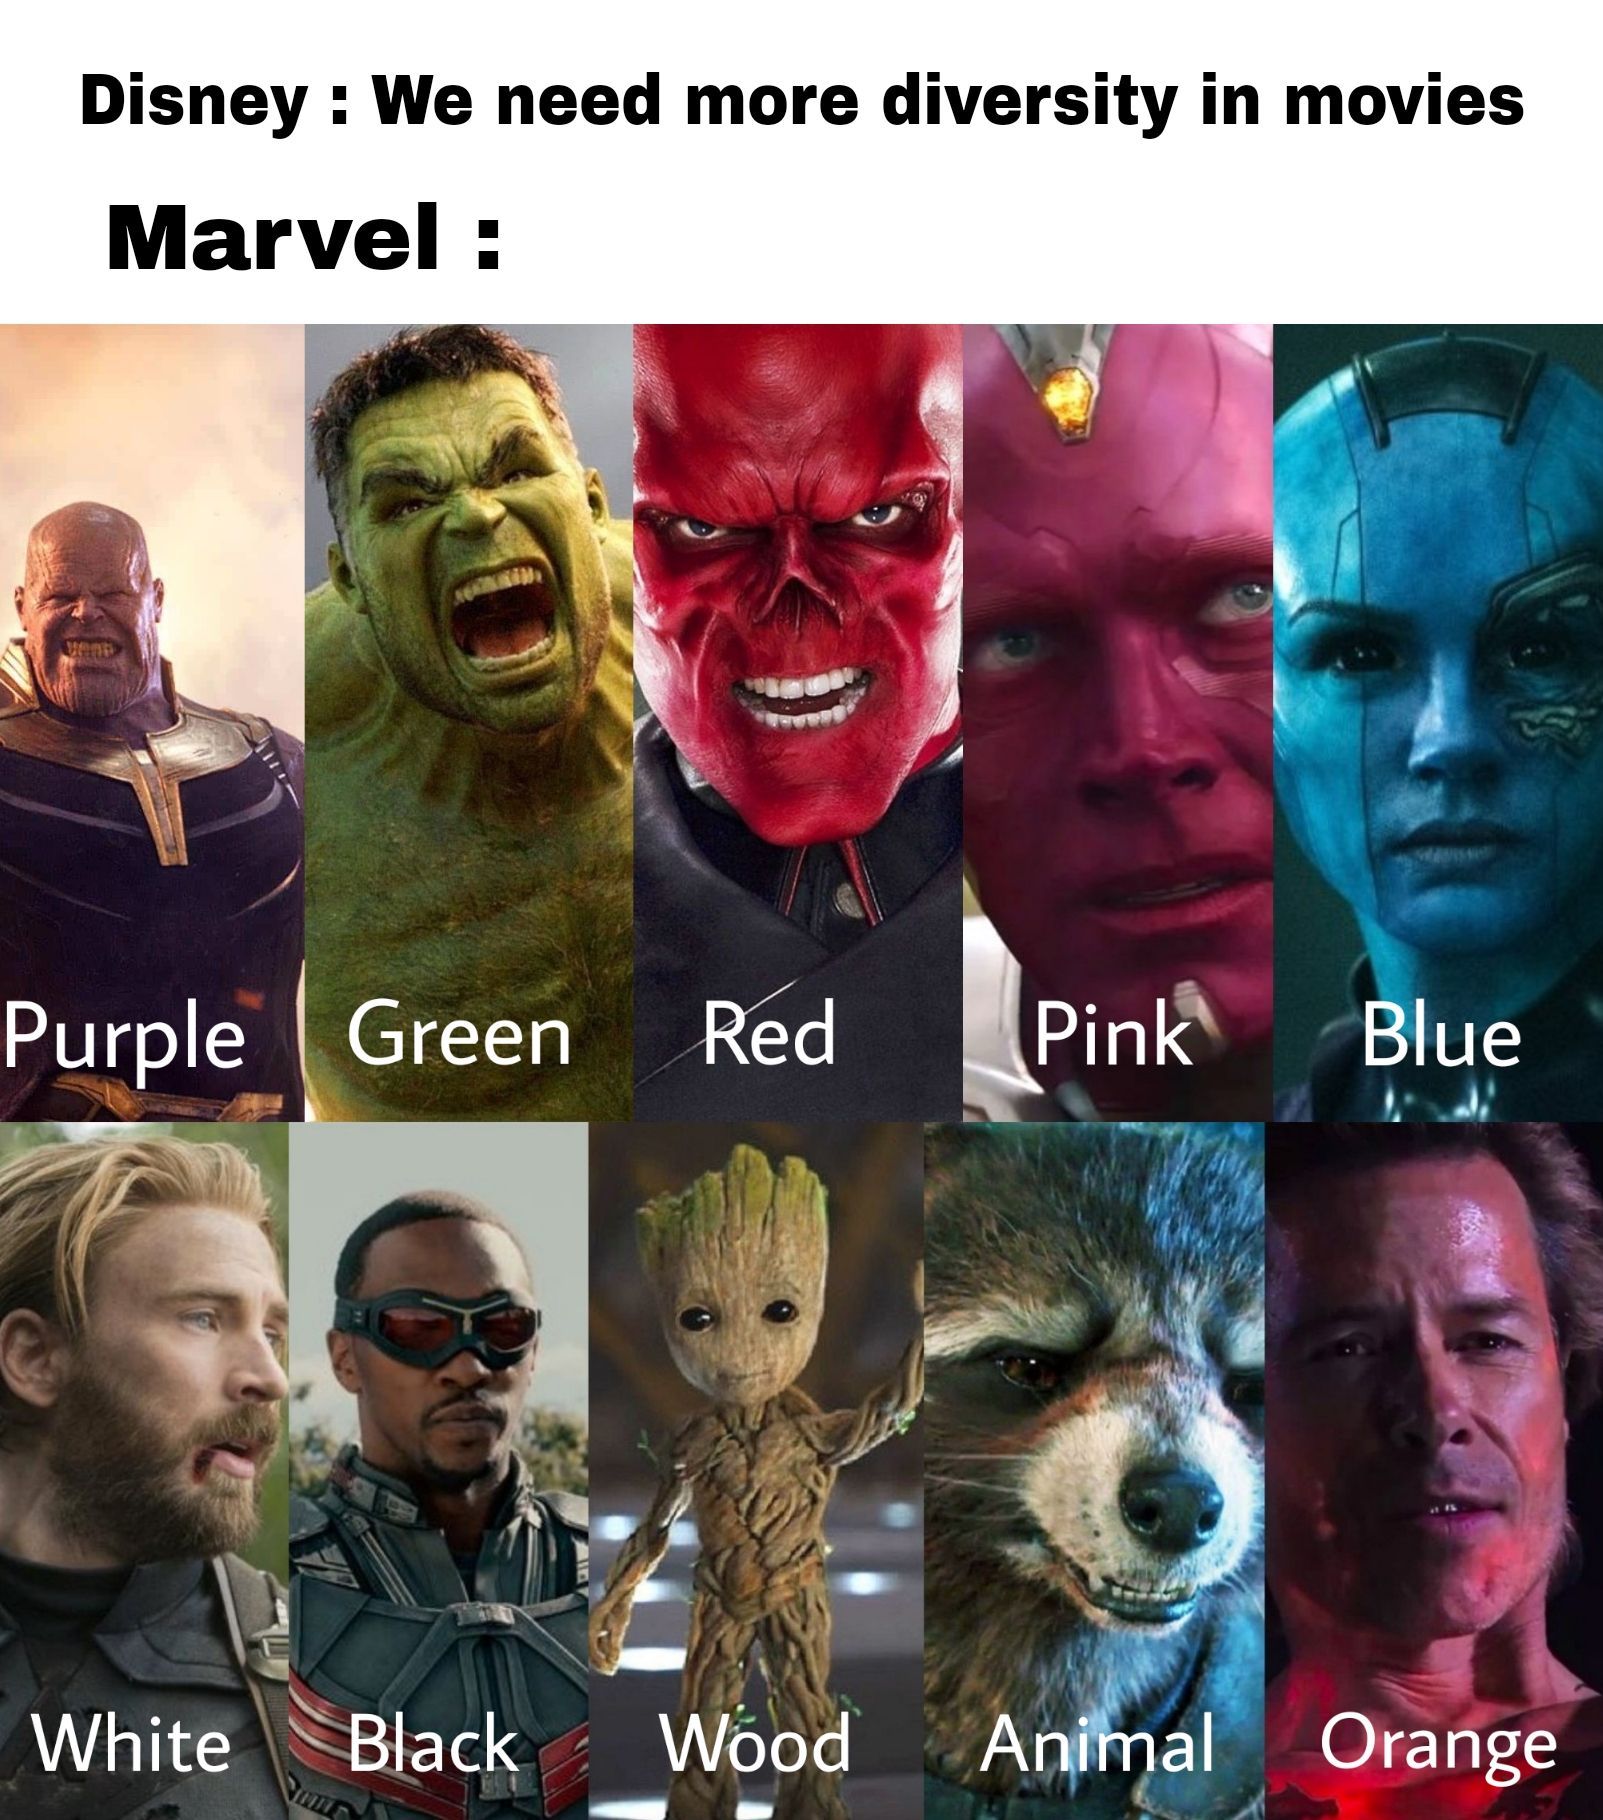 Disney : We need more diversity in movies
Marvel:
Purple Green Red Pink Blue
White Black Wood Animal Orange